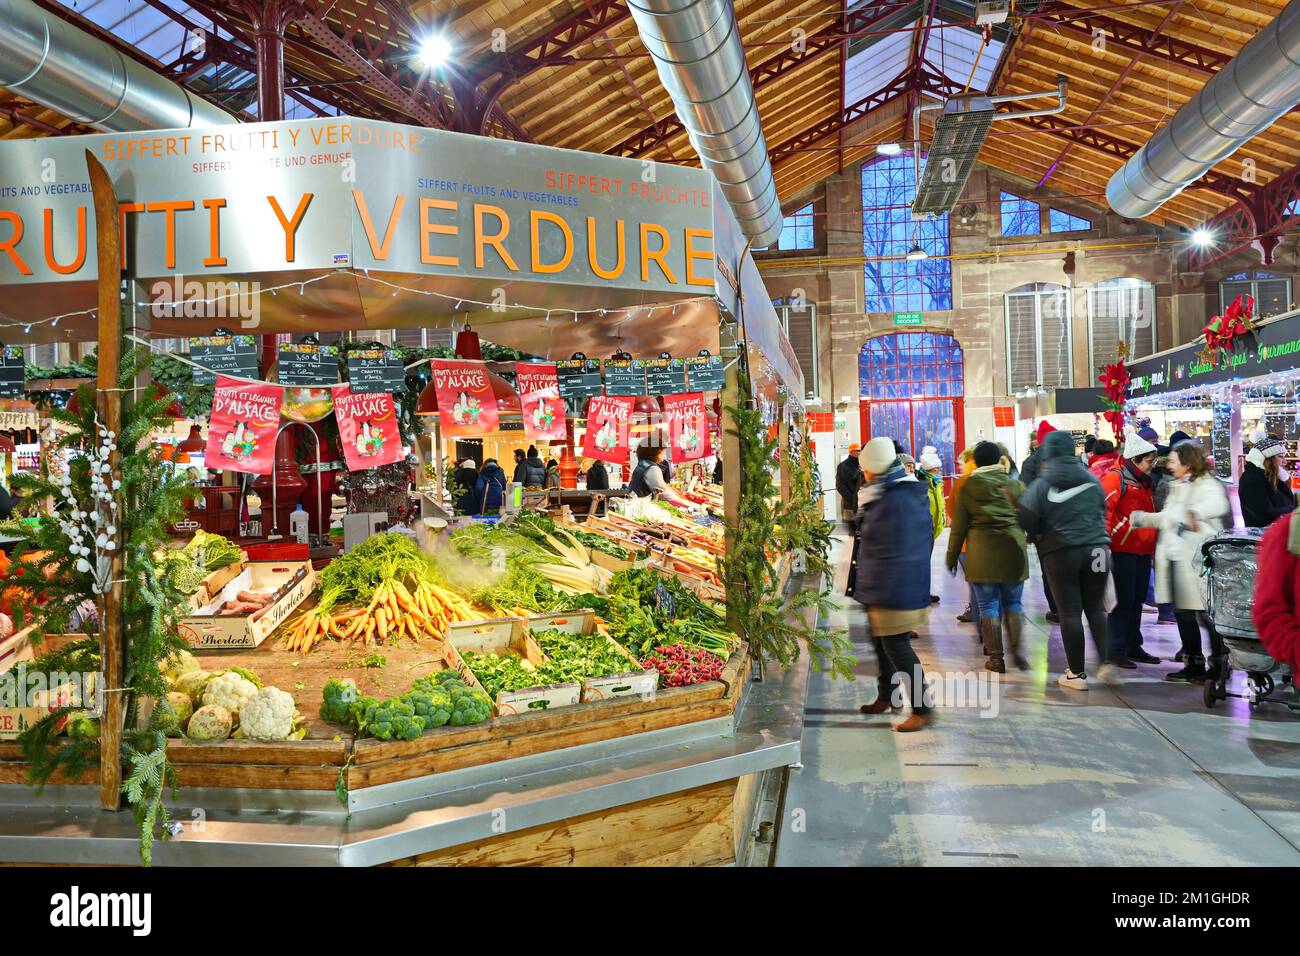 The covered market of Colmar (Le Marché Couvert de Colmar)  Colmar, France - December 2022 Stock Photo